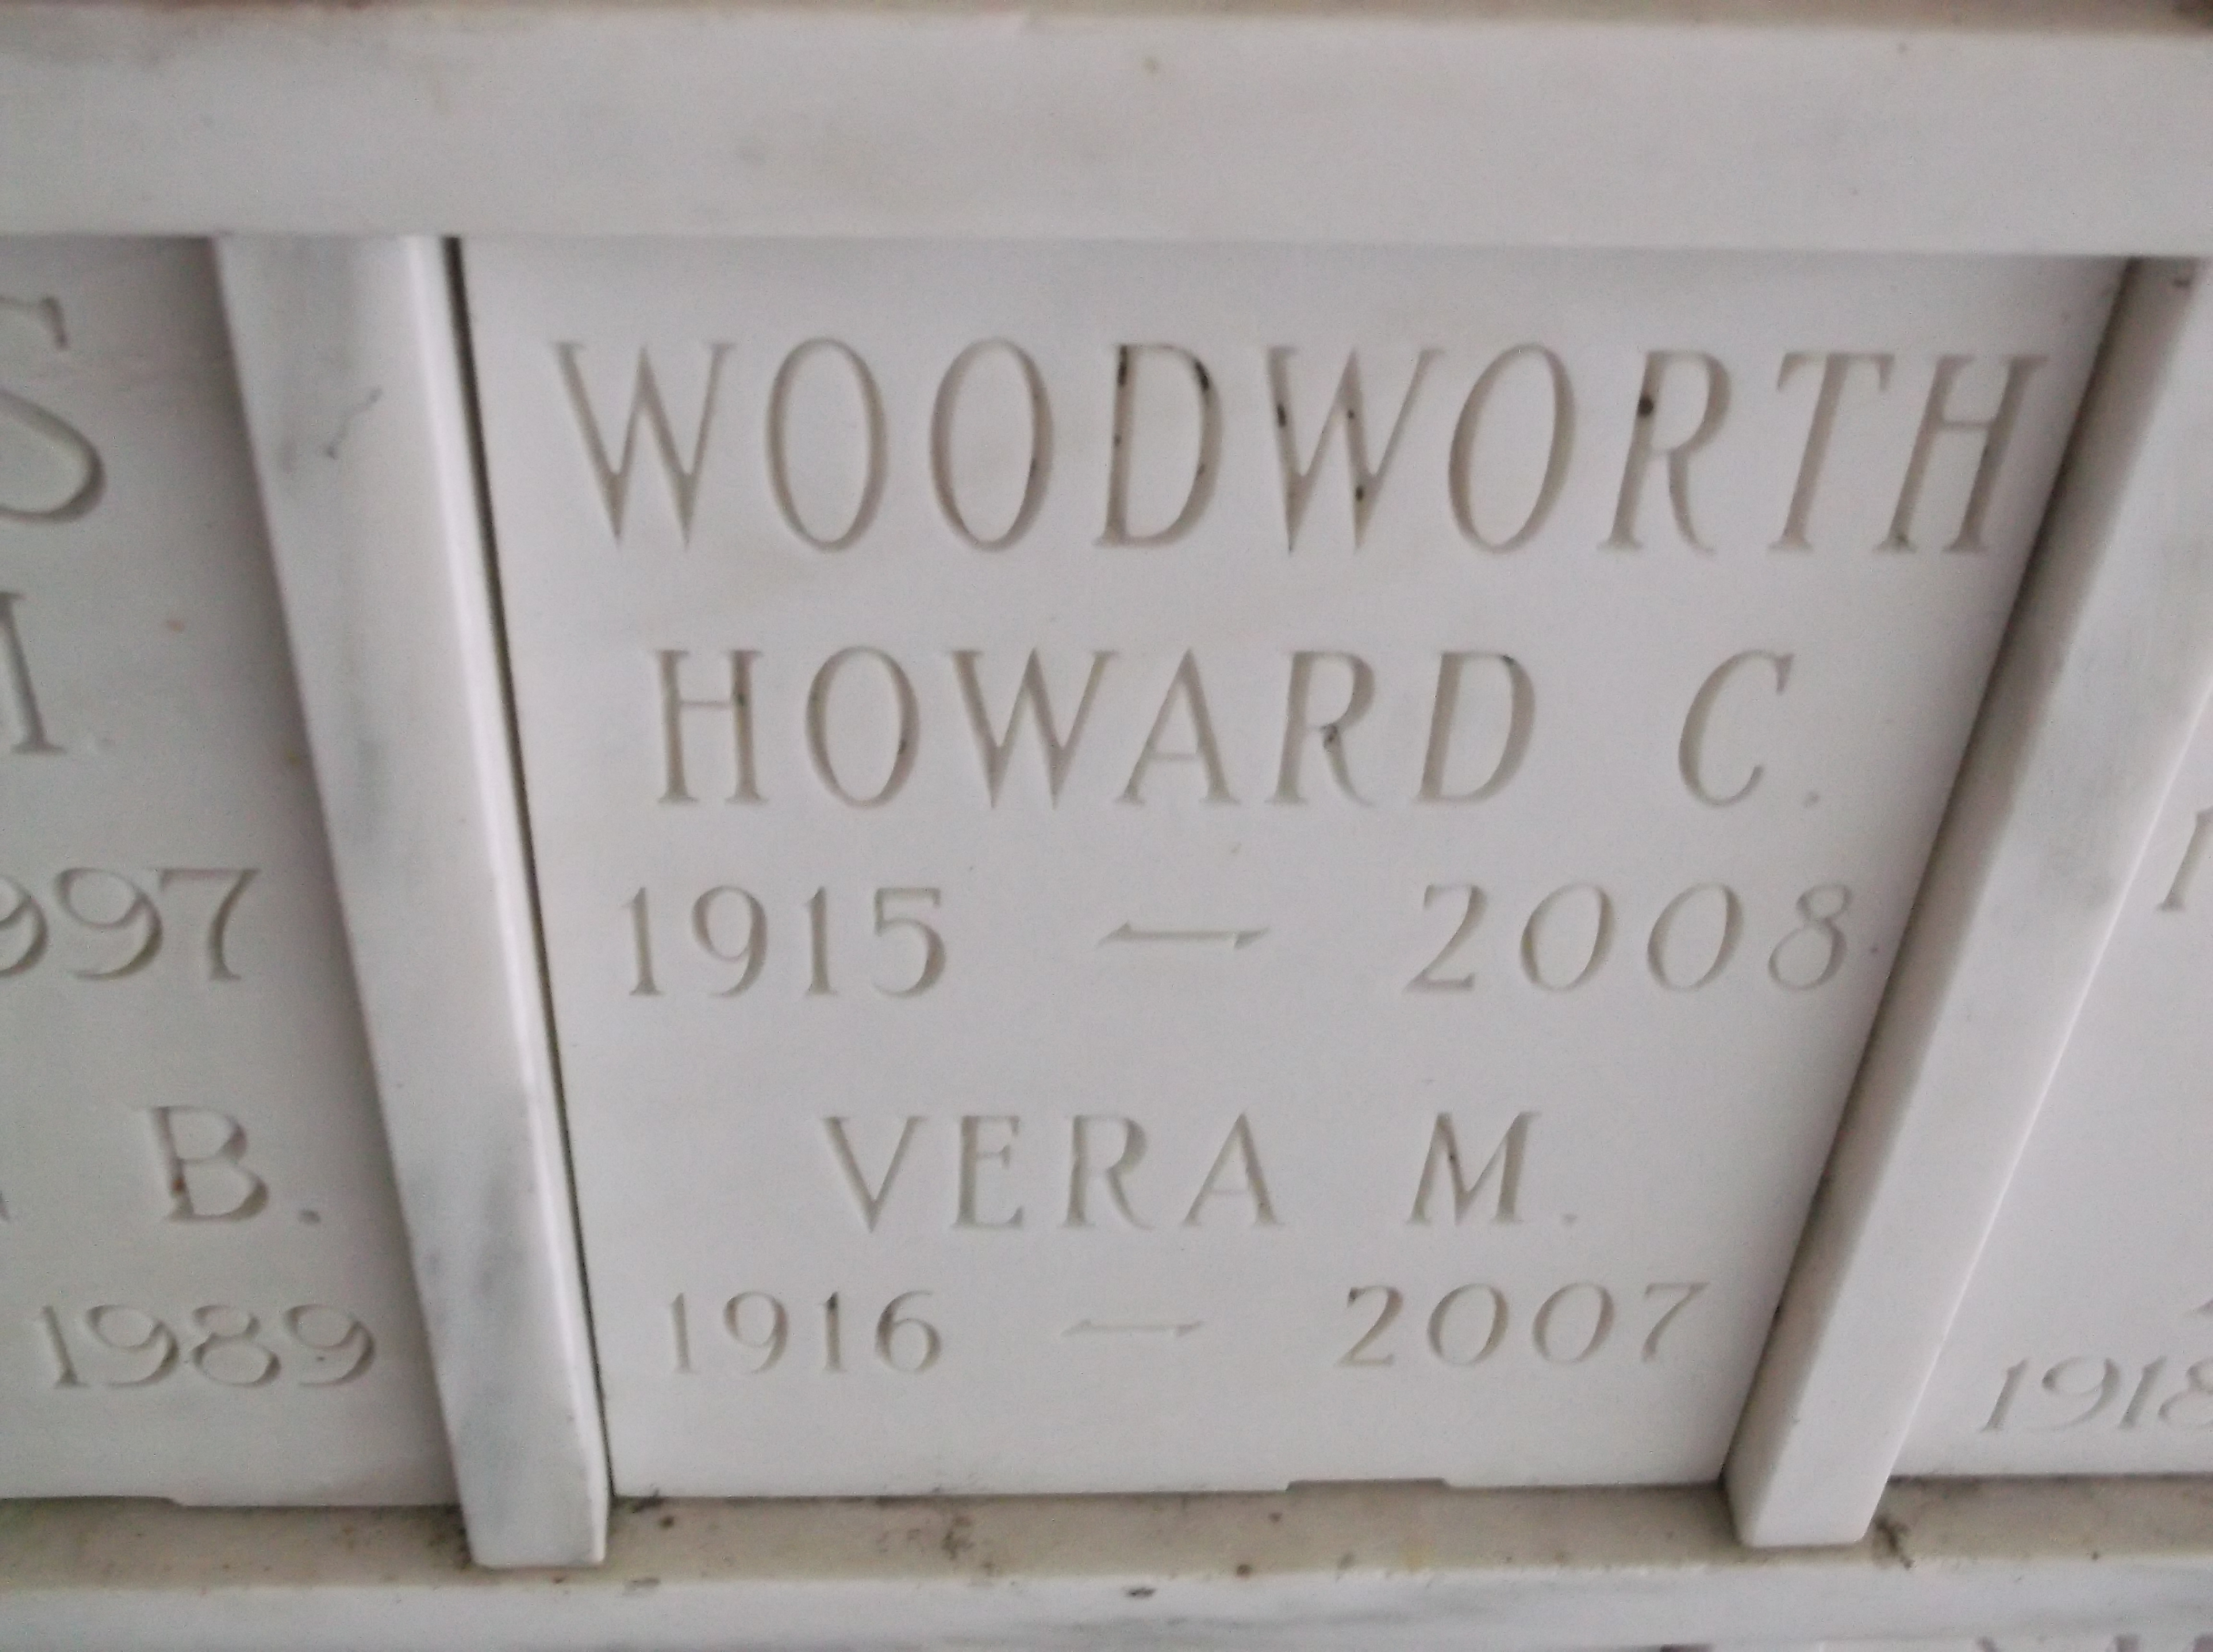 Vera M Woodworth